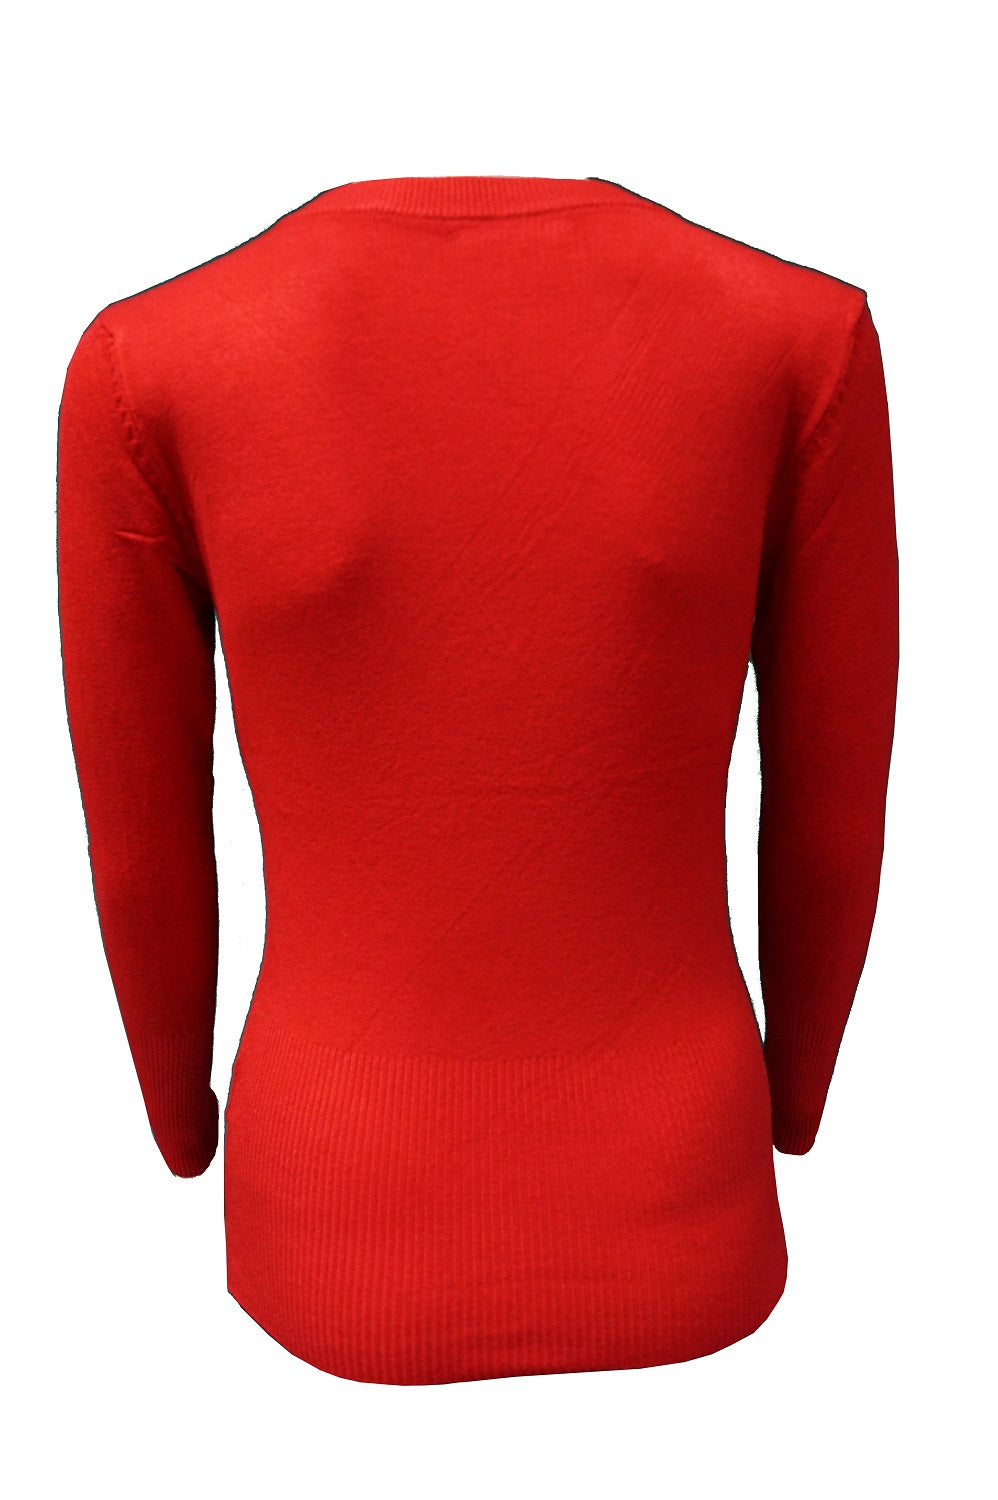 Rot Pullover Langarm Schwarz Weis Braun Blau Grau Rot | Fashion Königin